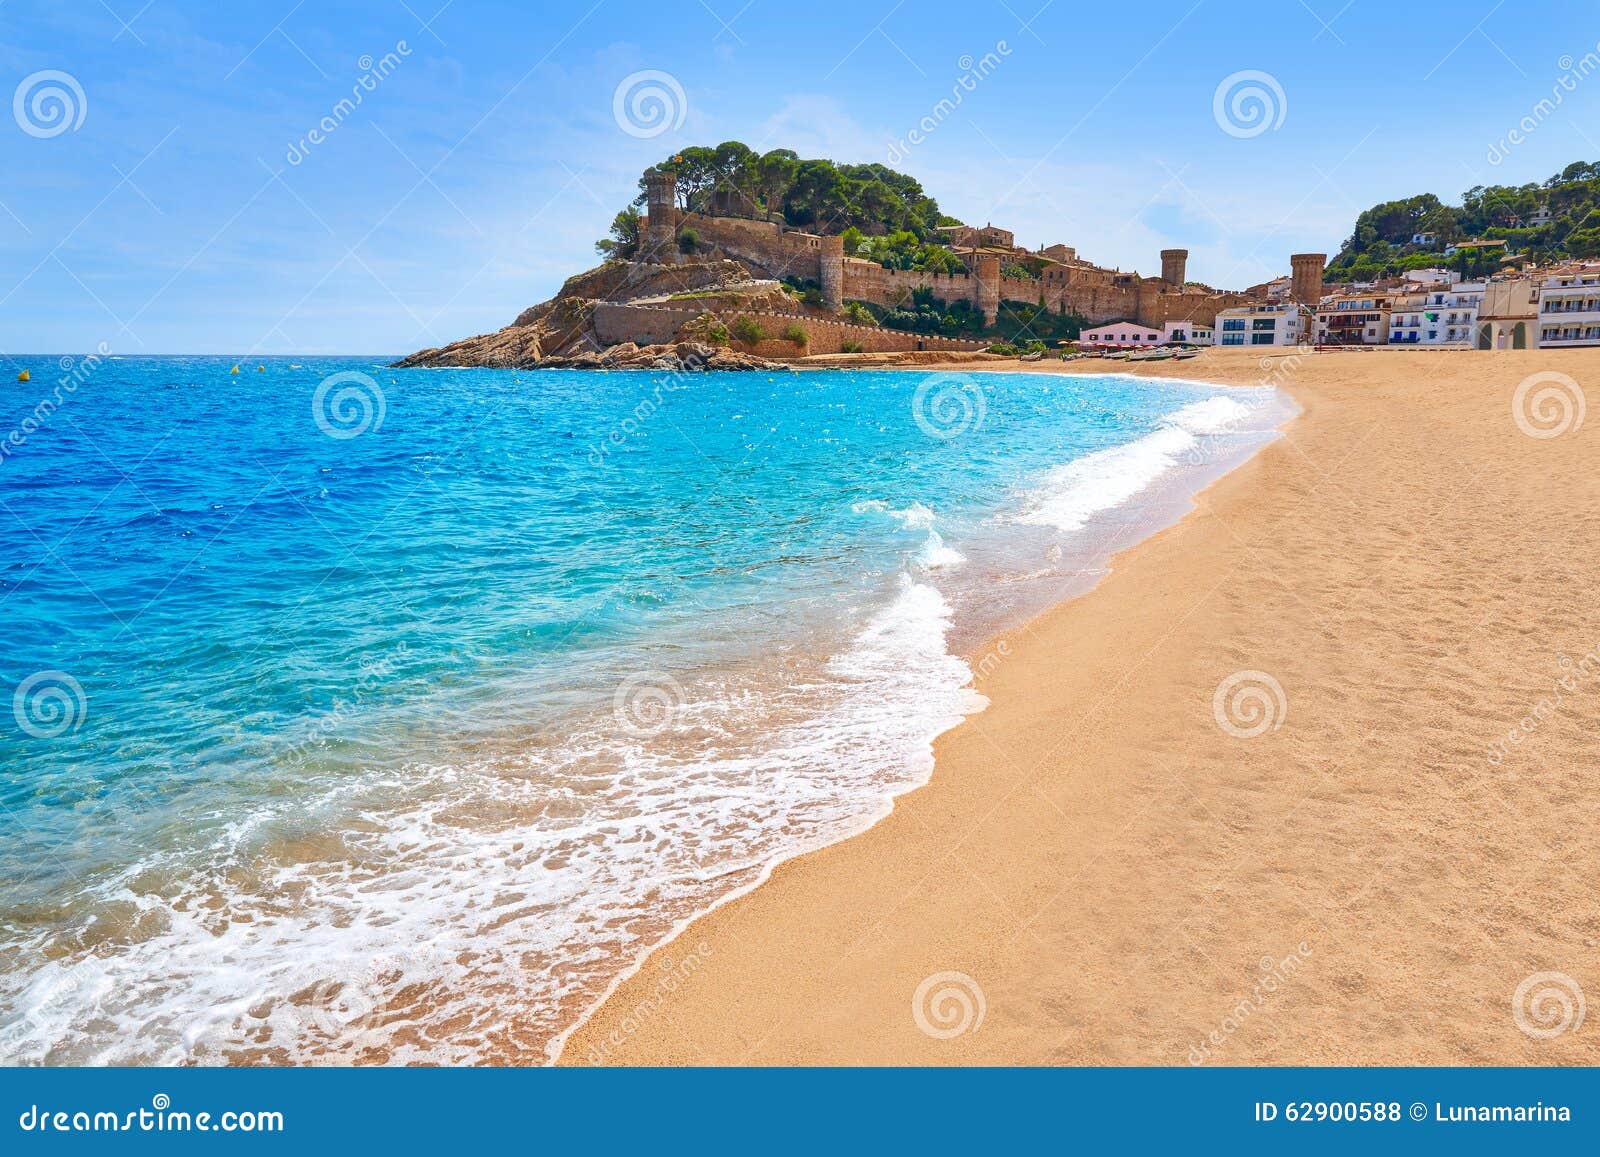 tossa de mar beach in costa brava of catalonia